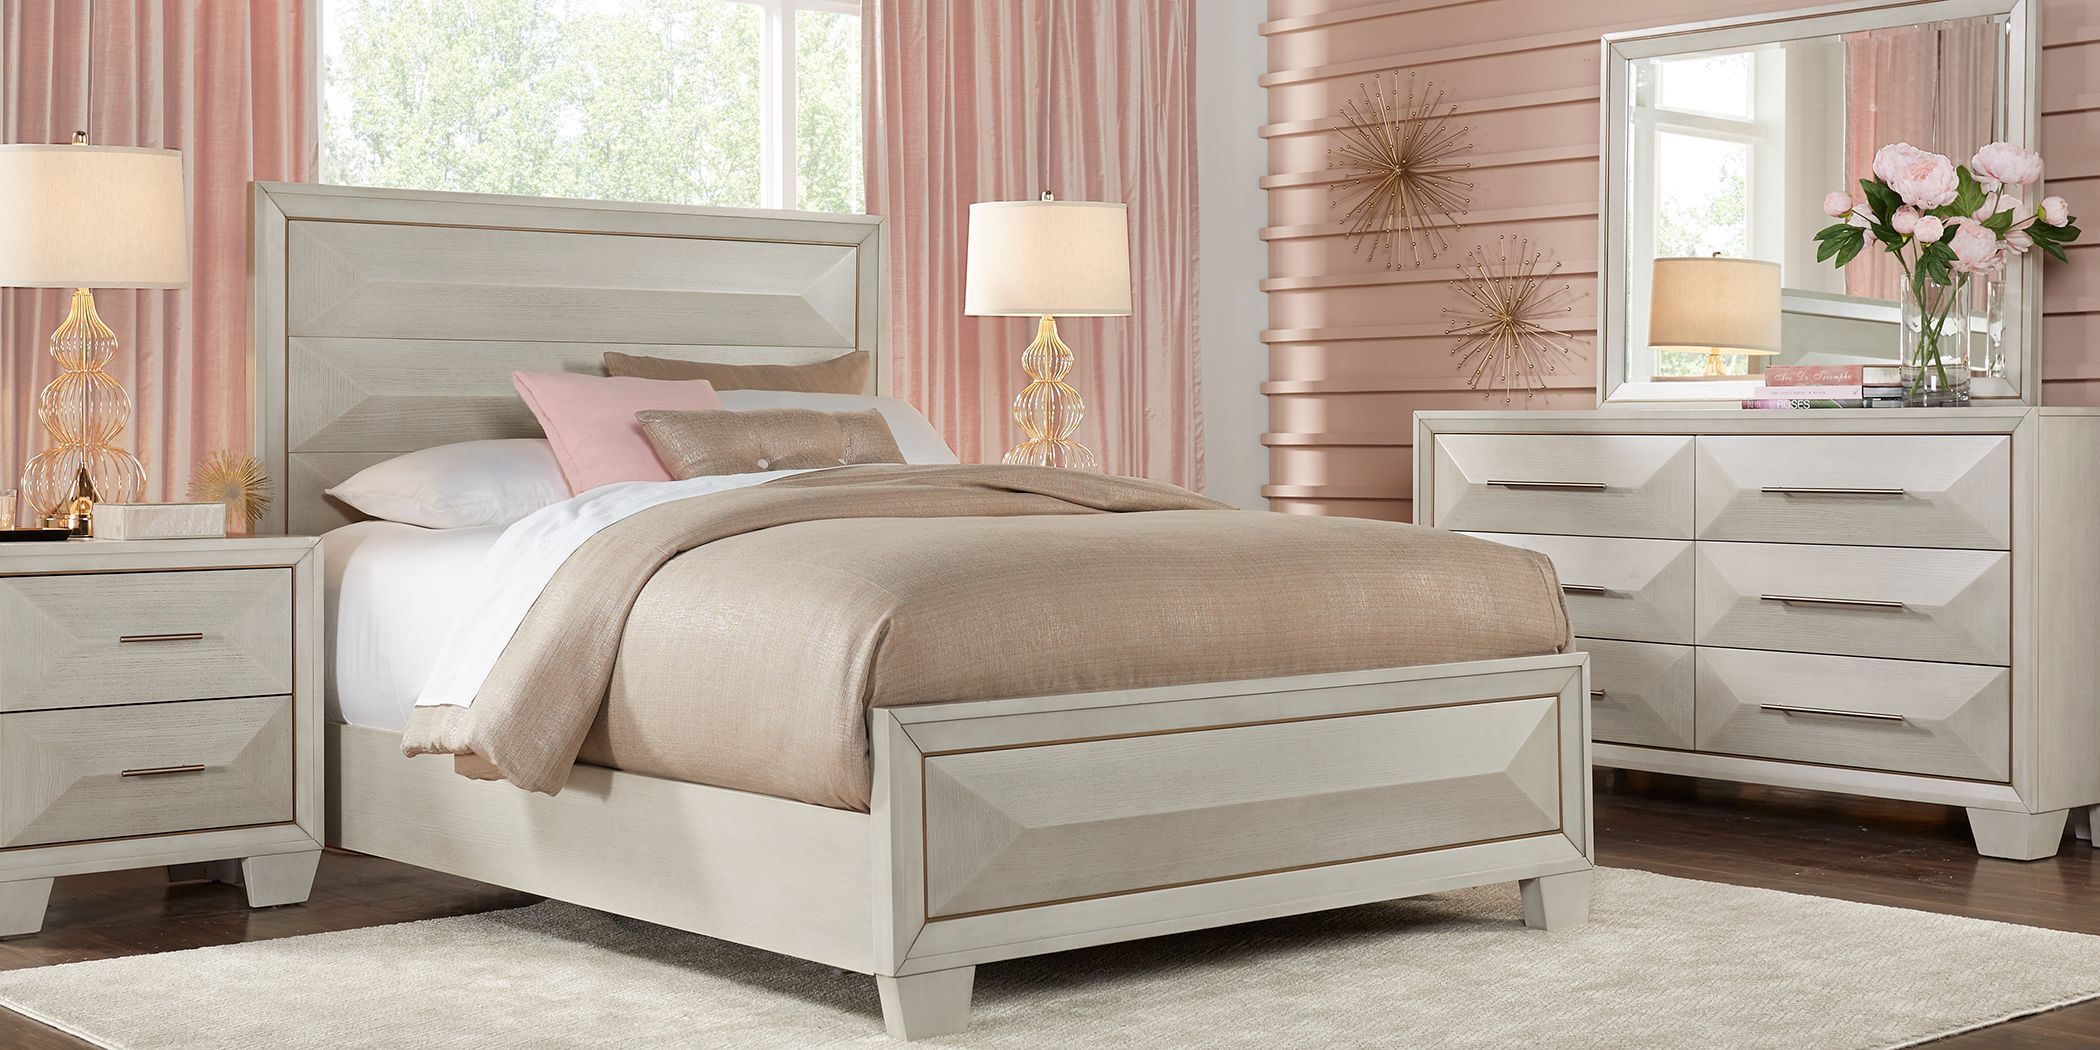 sofia vergara vegas white bedroom furniture